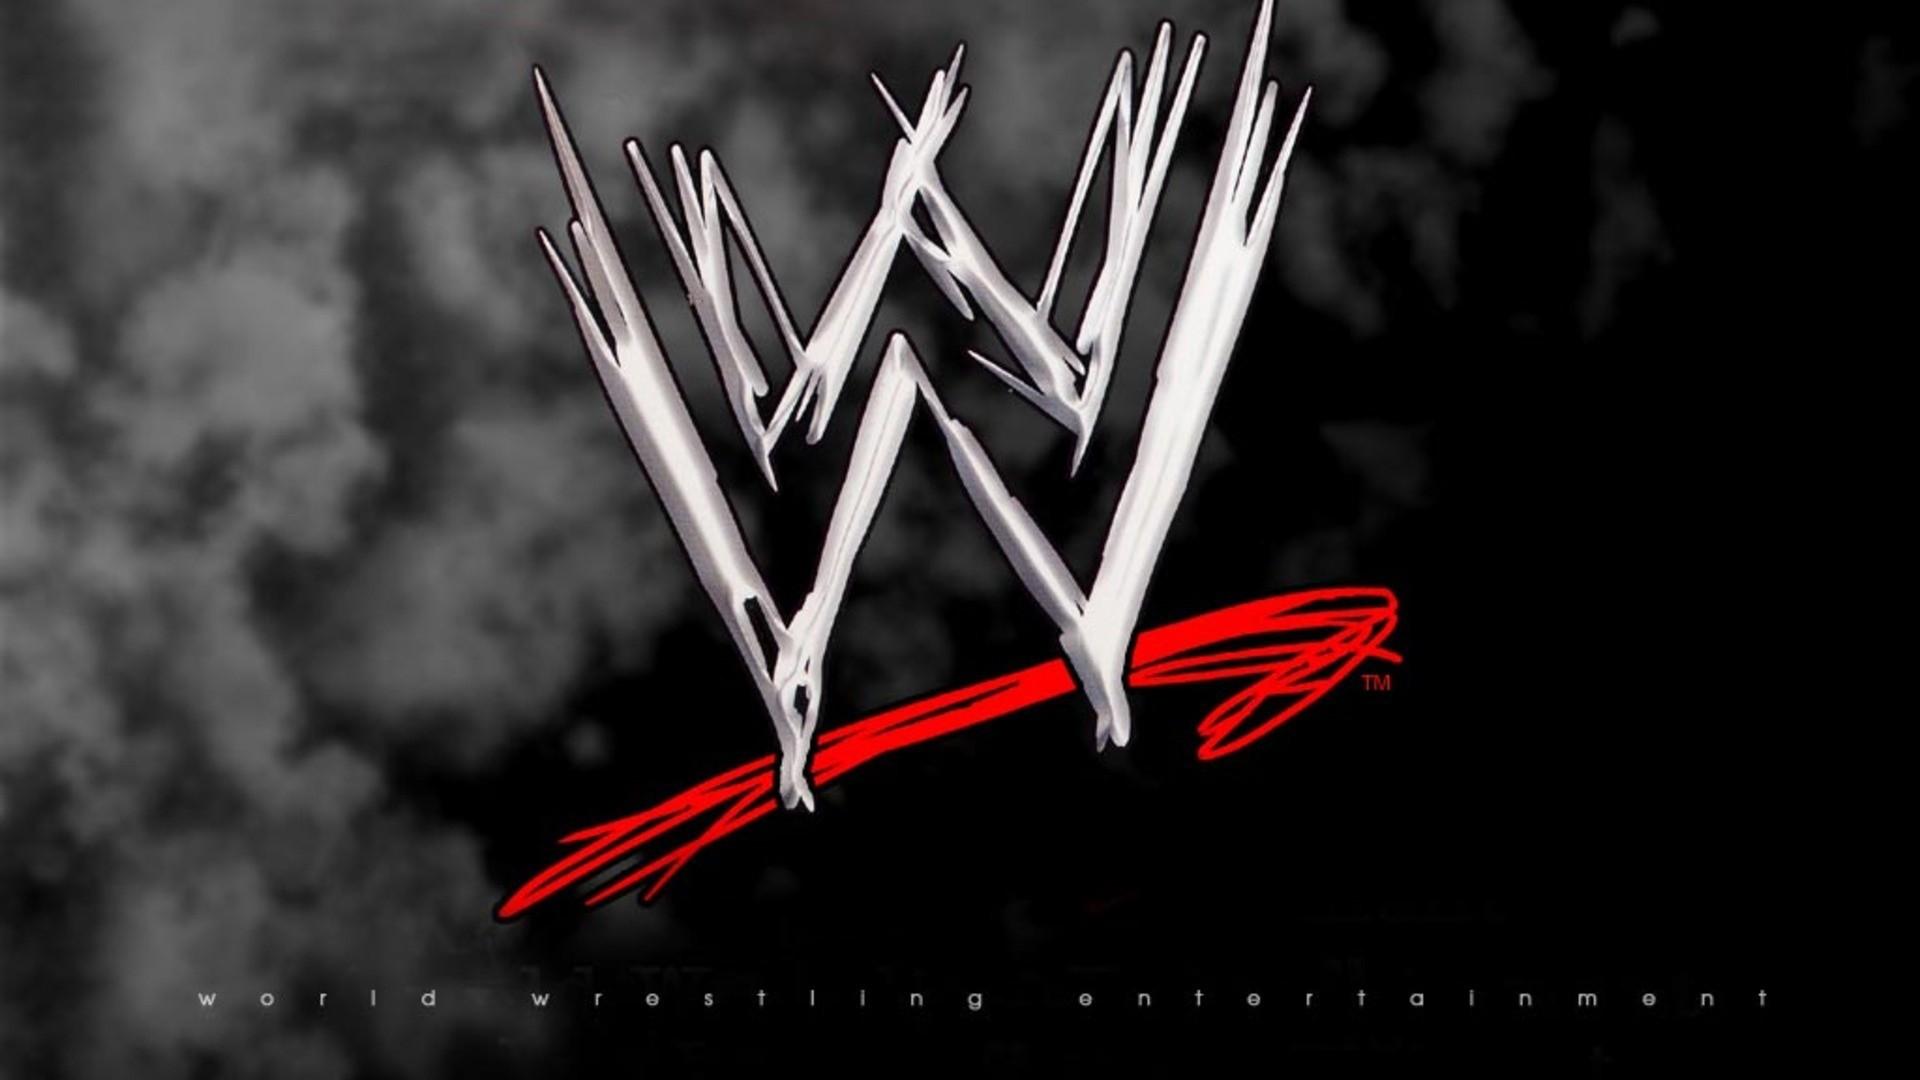 Wrestling Wwe World Entertainment Logos Wallpaper 5209